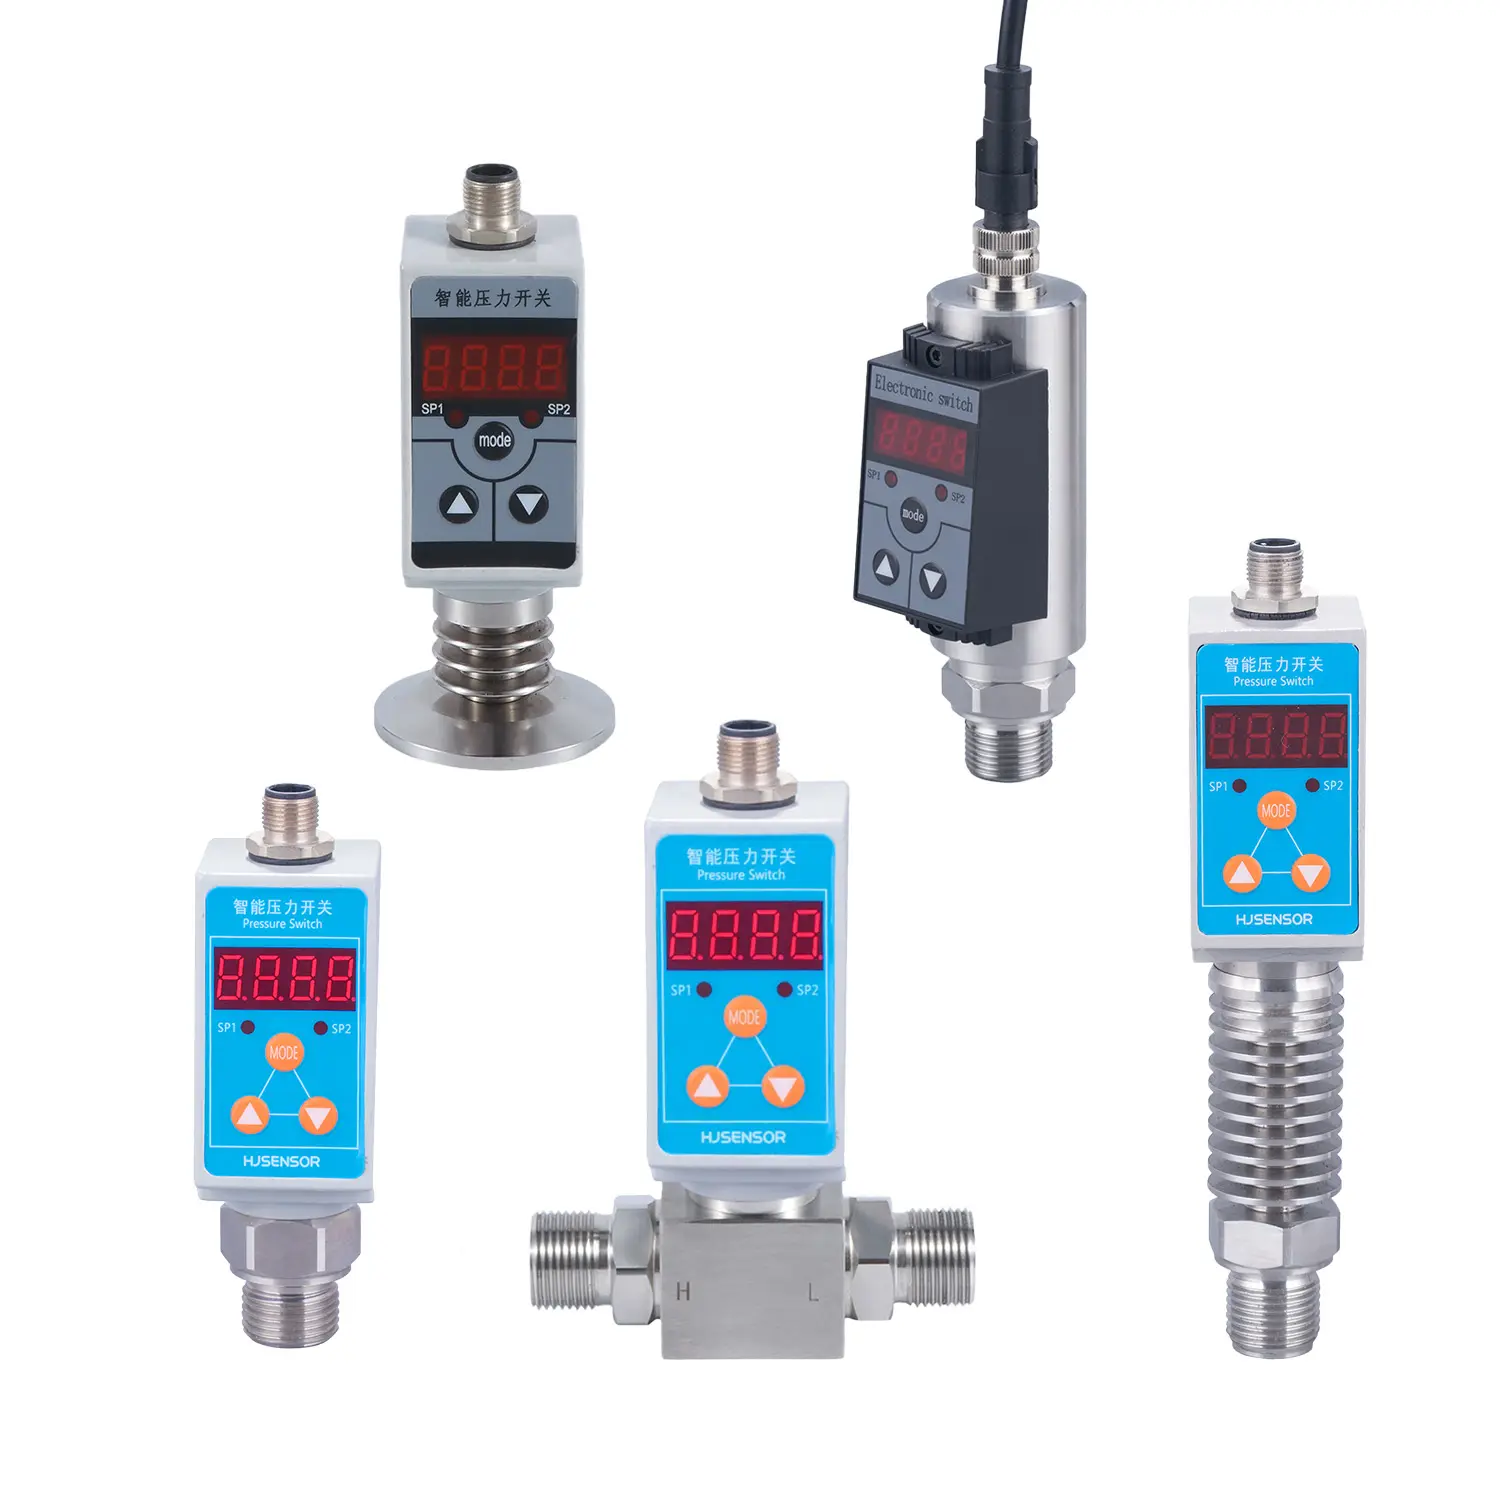 Hjsensor化学工業インテリジェントデジタル水圧スイッチ電子圧力コントローラー水圧スイッチ